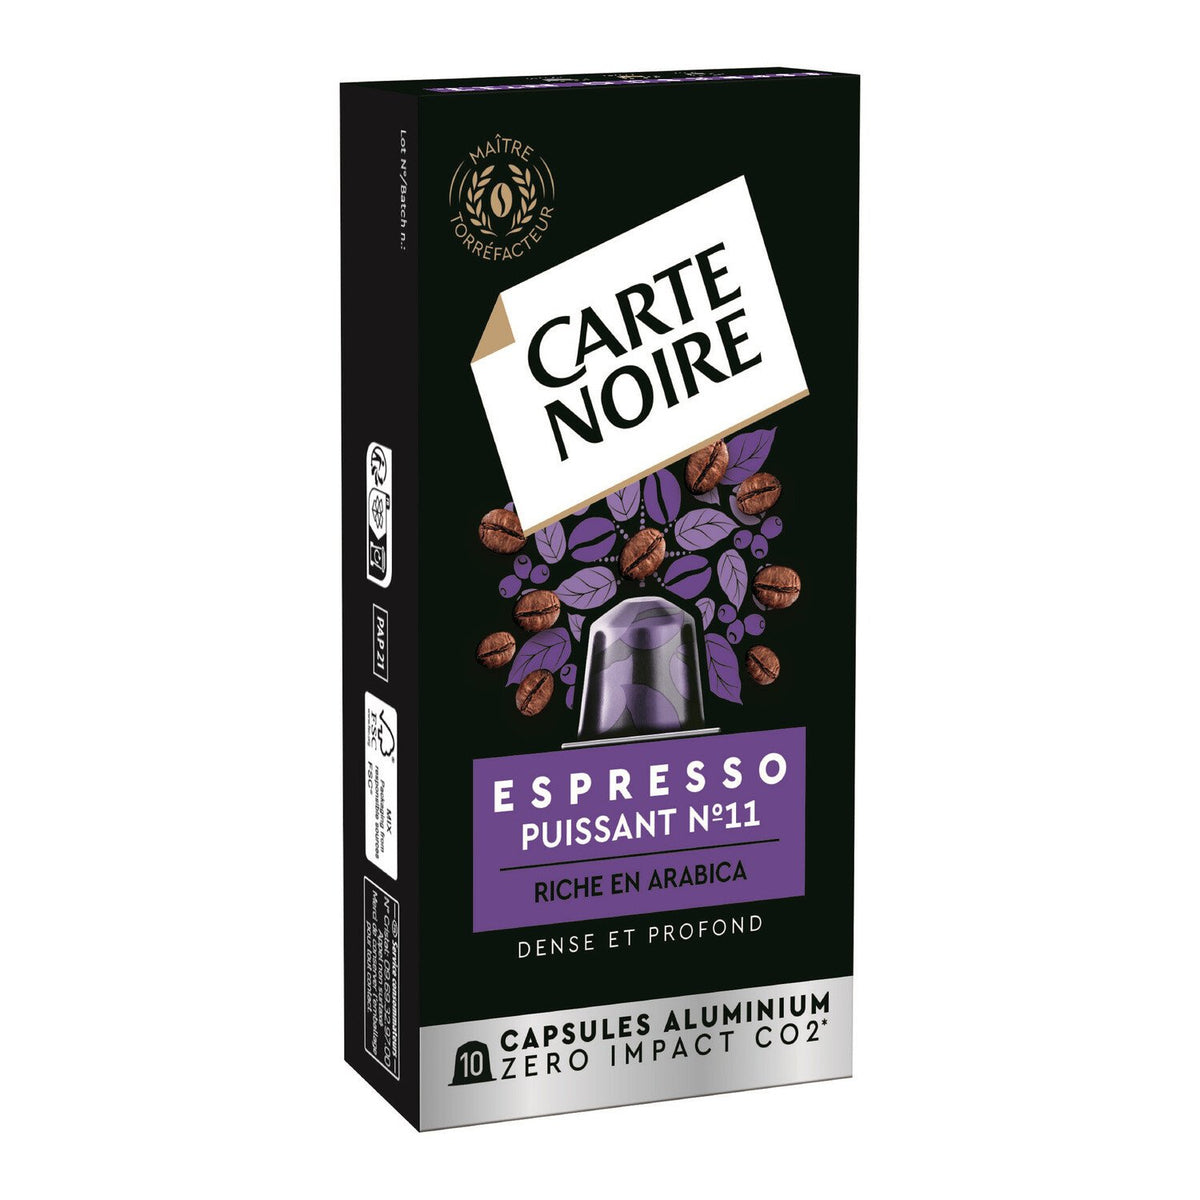 CARTE NOIRE Espresso puissant n°11 type nespresso 10 capsules 53g -F124